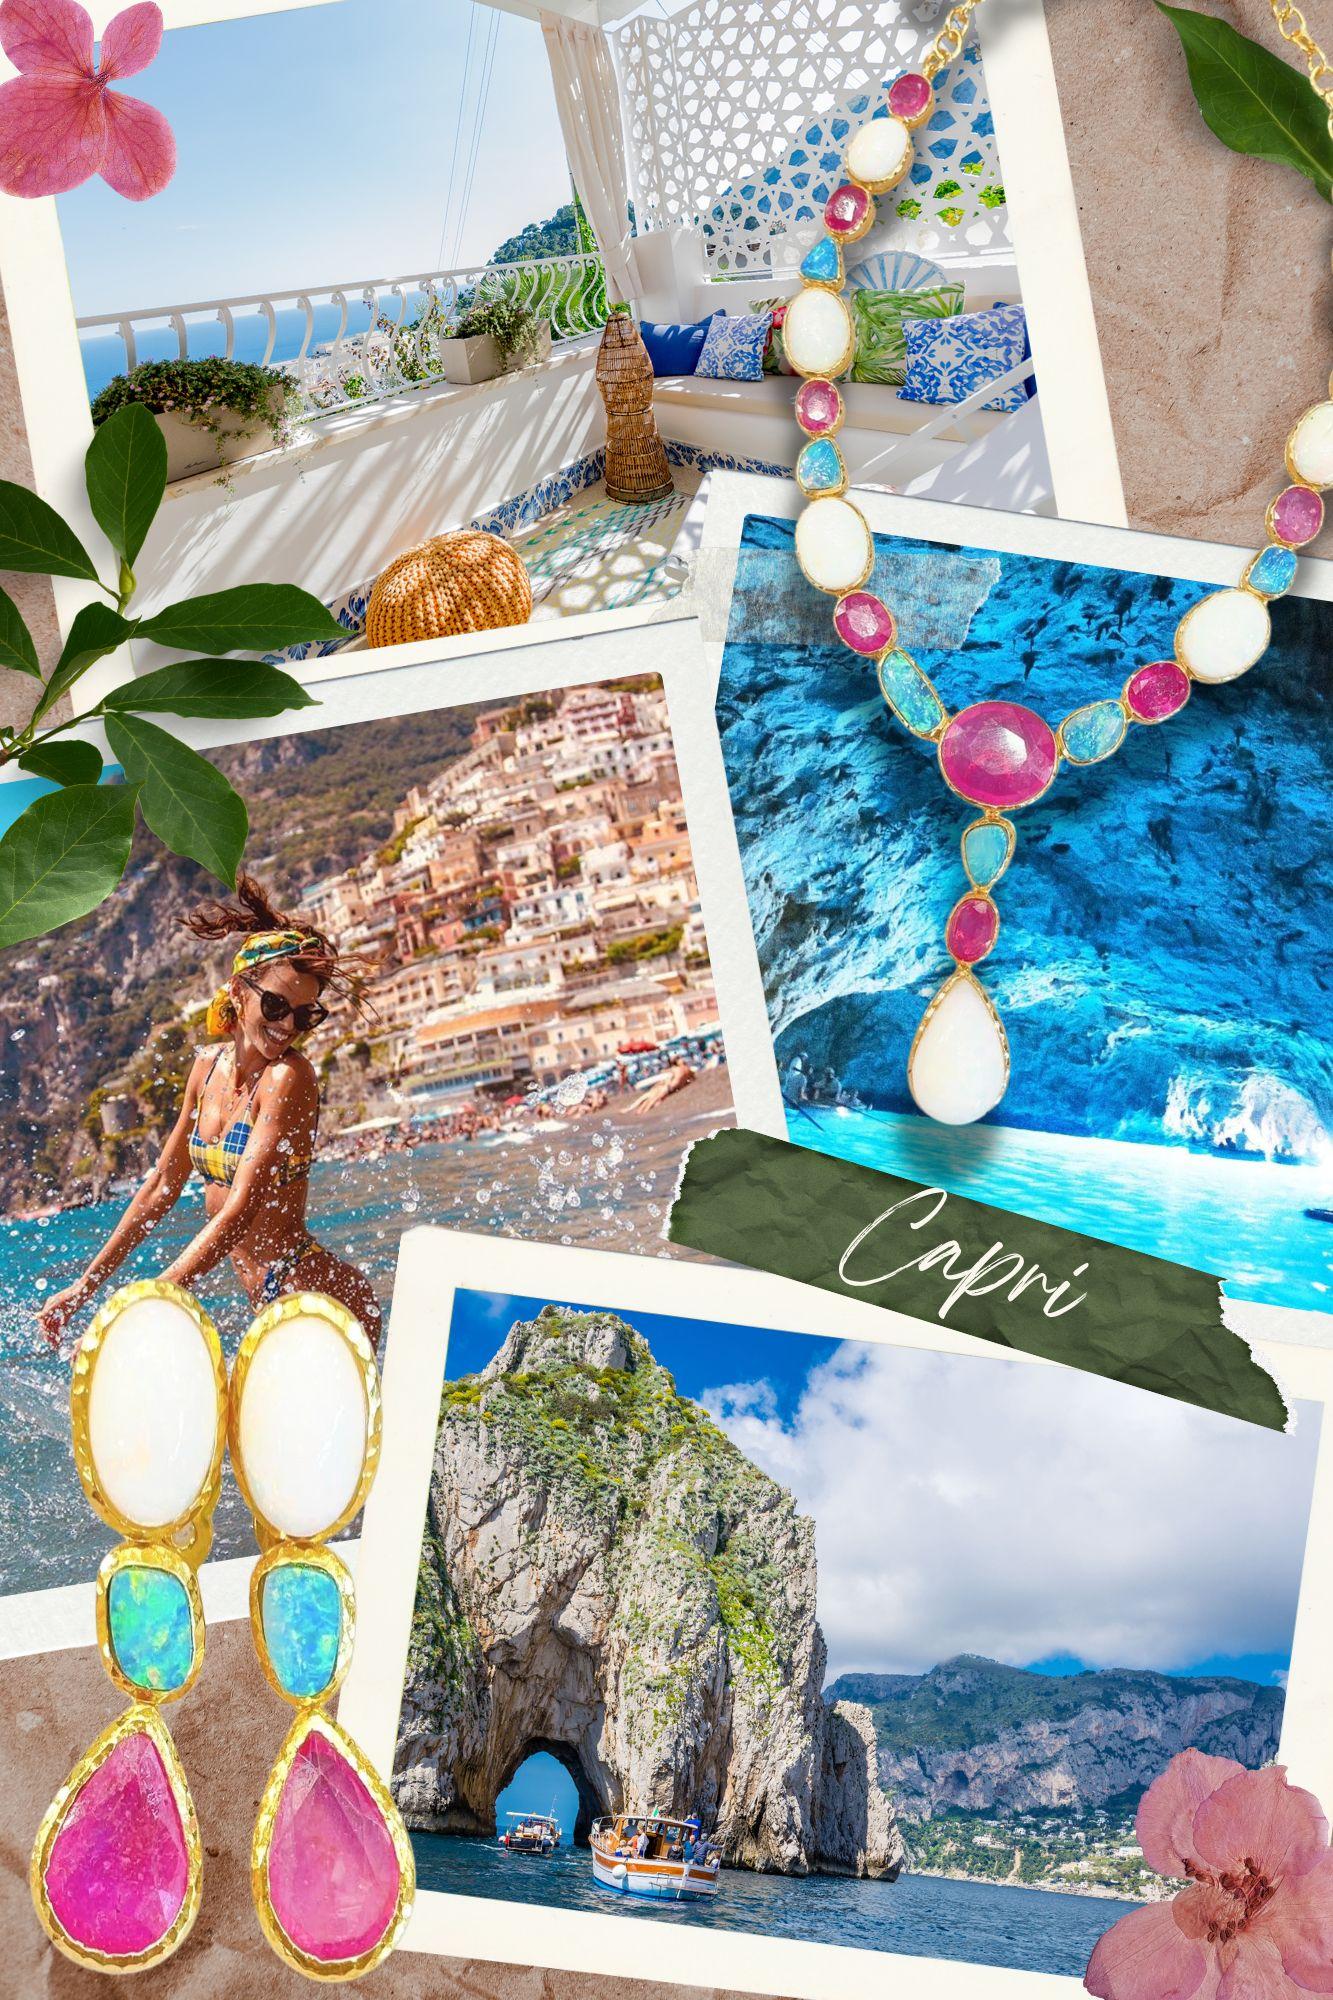 Bochic “Capri” Coral, Pearl & Rose Cut Sapphire Earrings Set18K Gold & Silver  For Sale 6